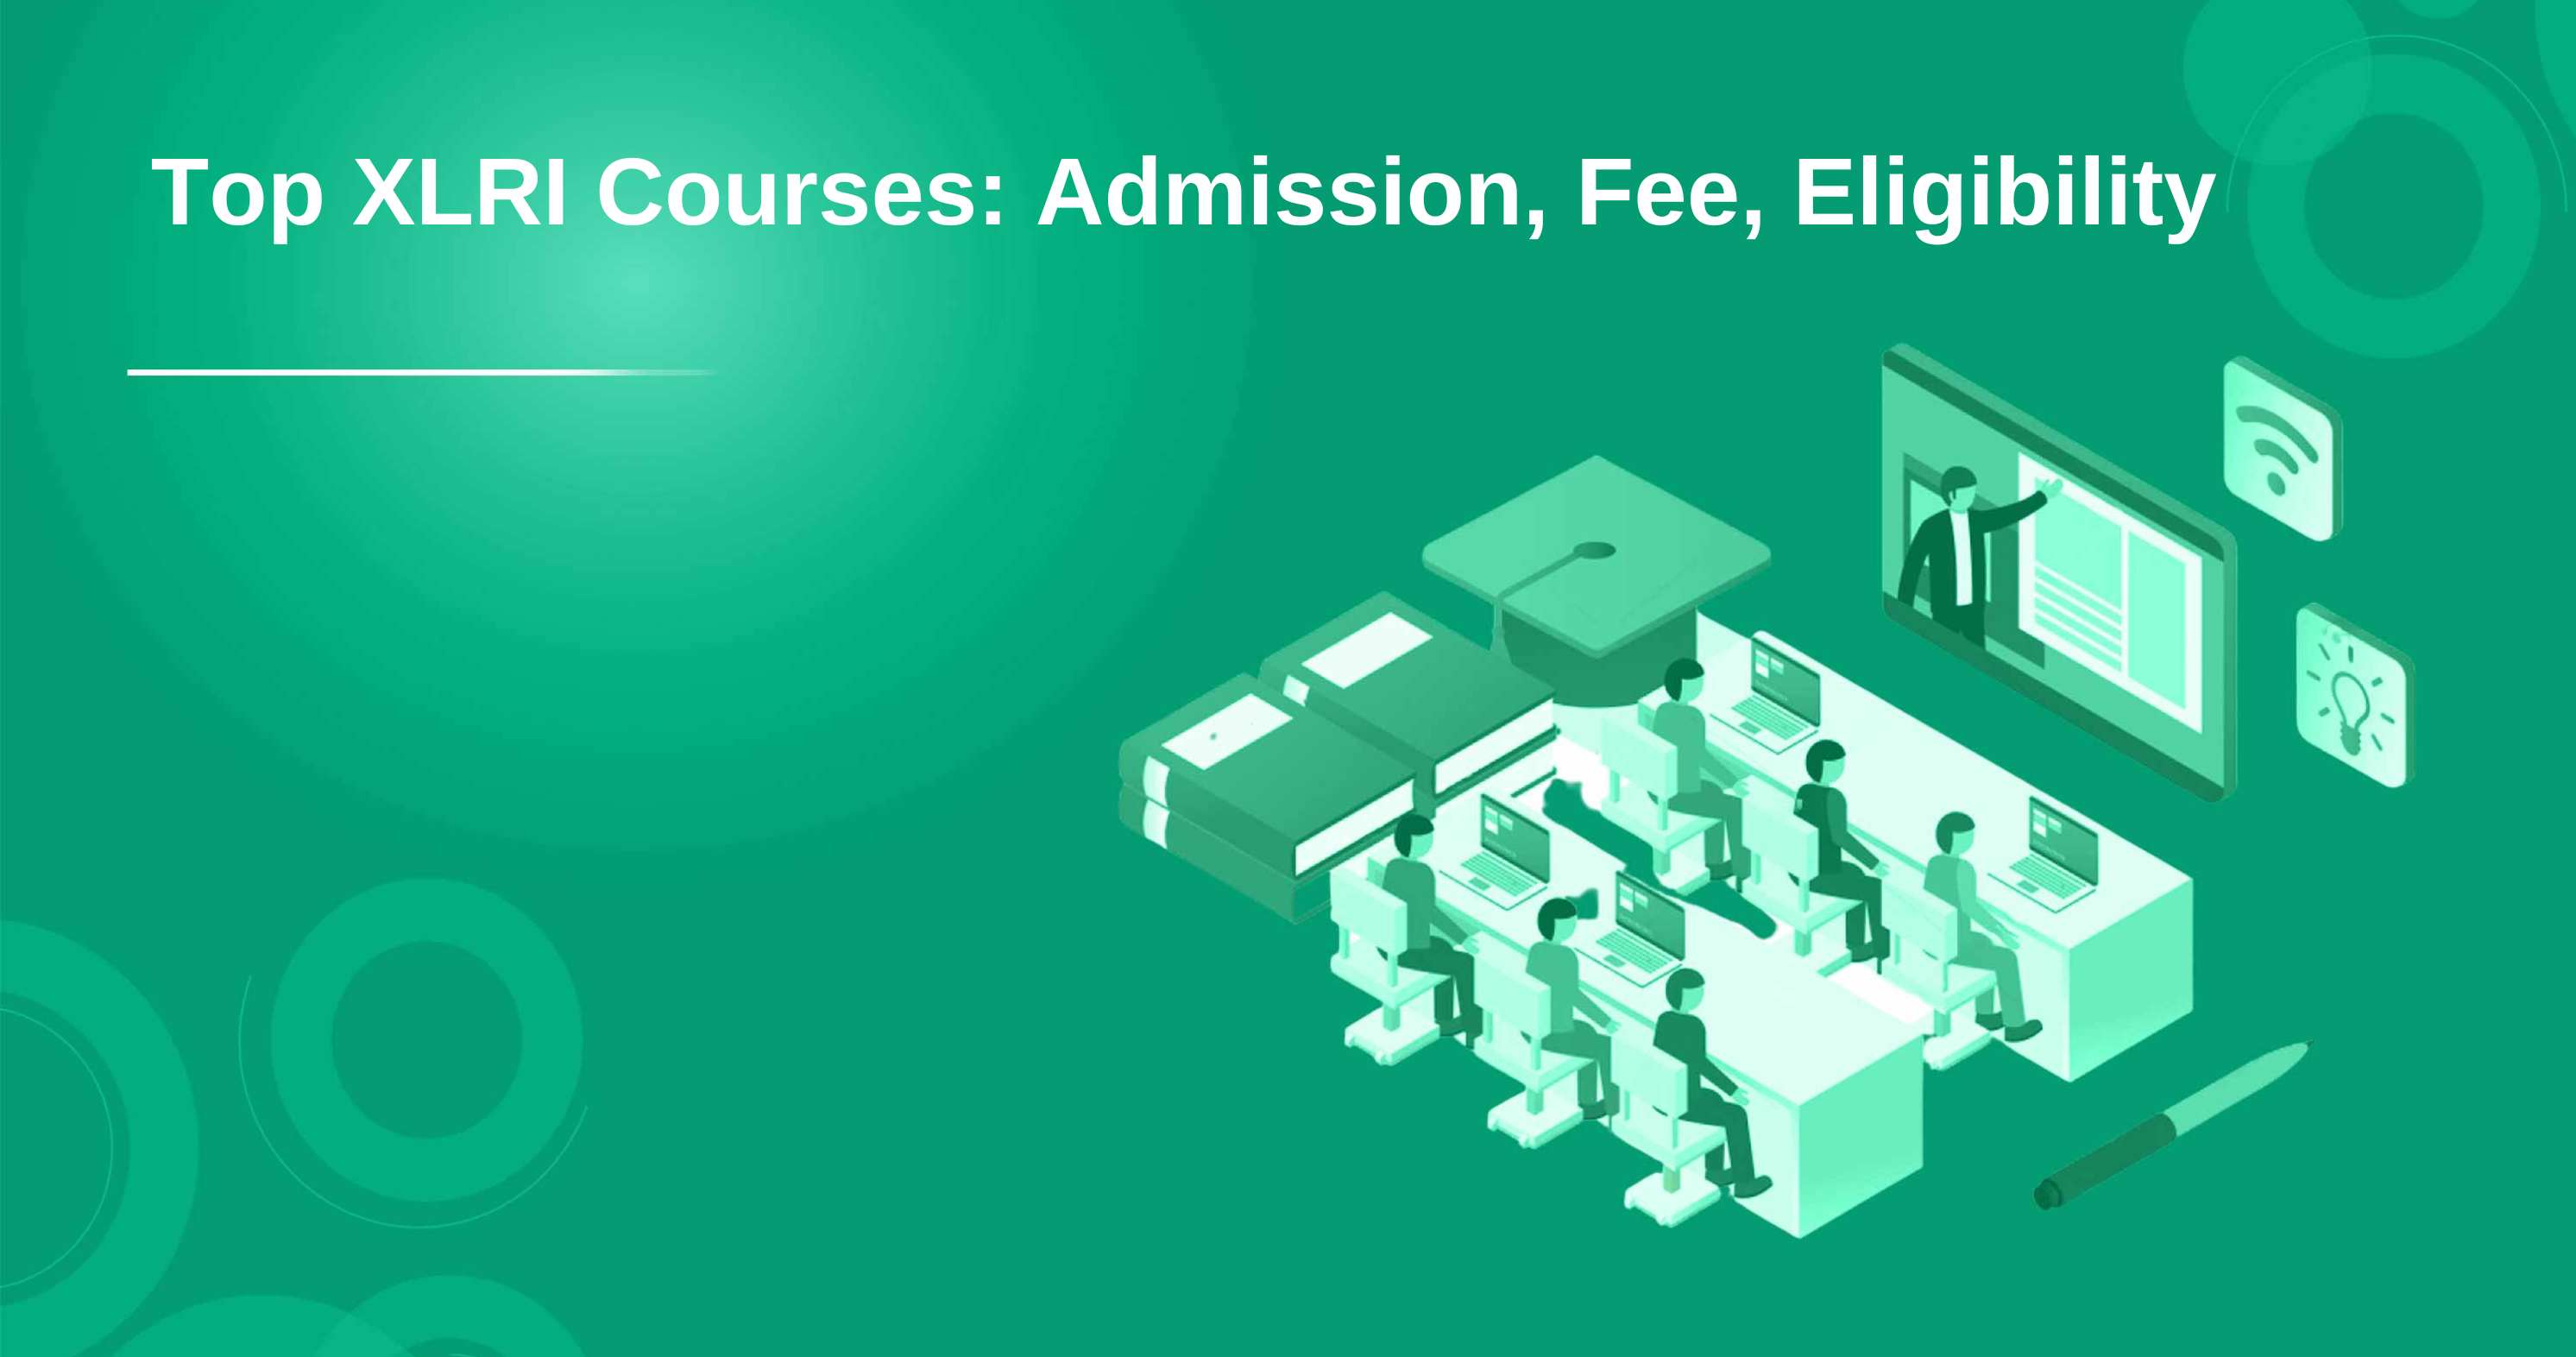 Top XLRI Courses: Admission, Fee, Eligibility